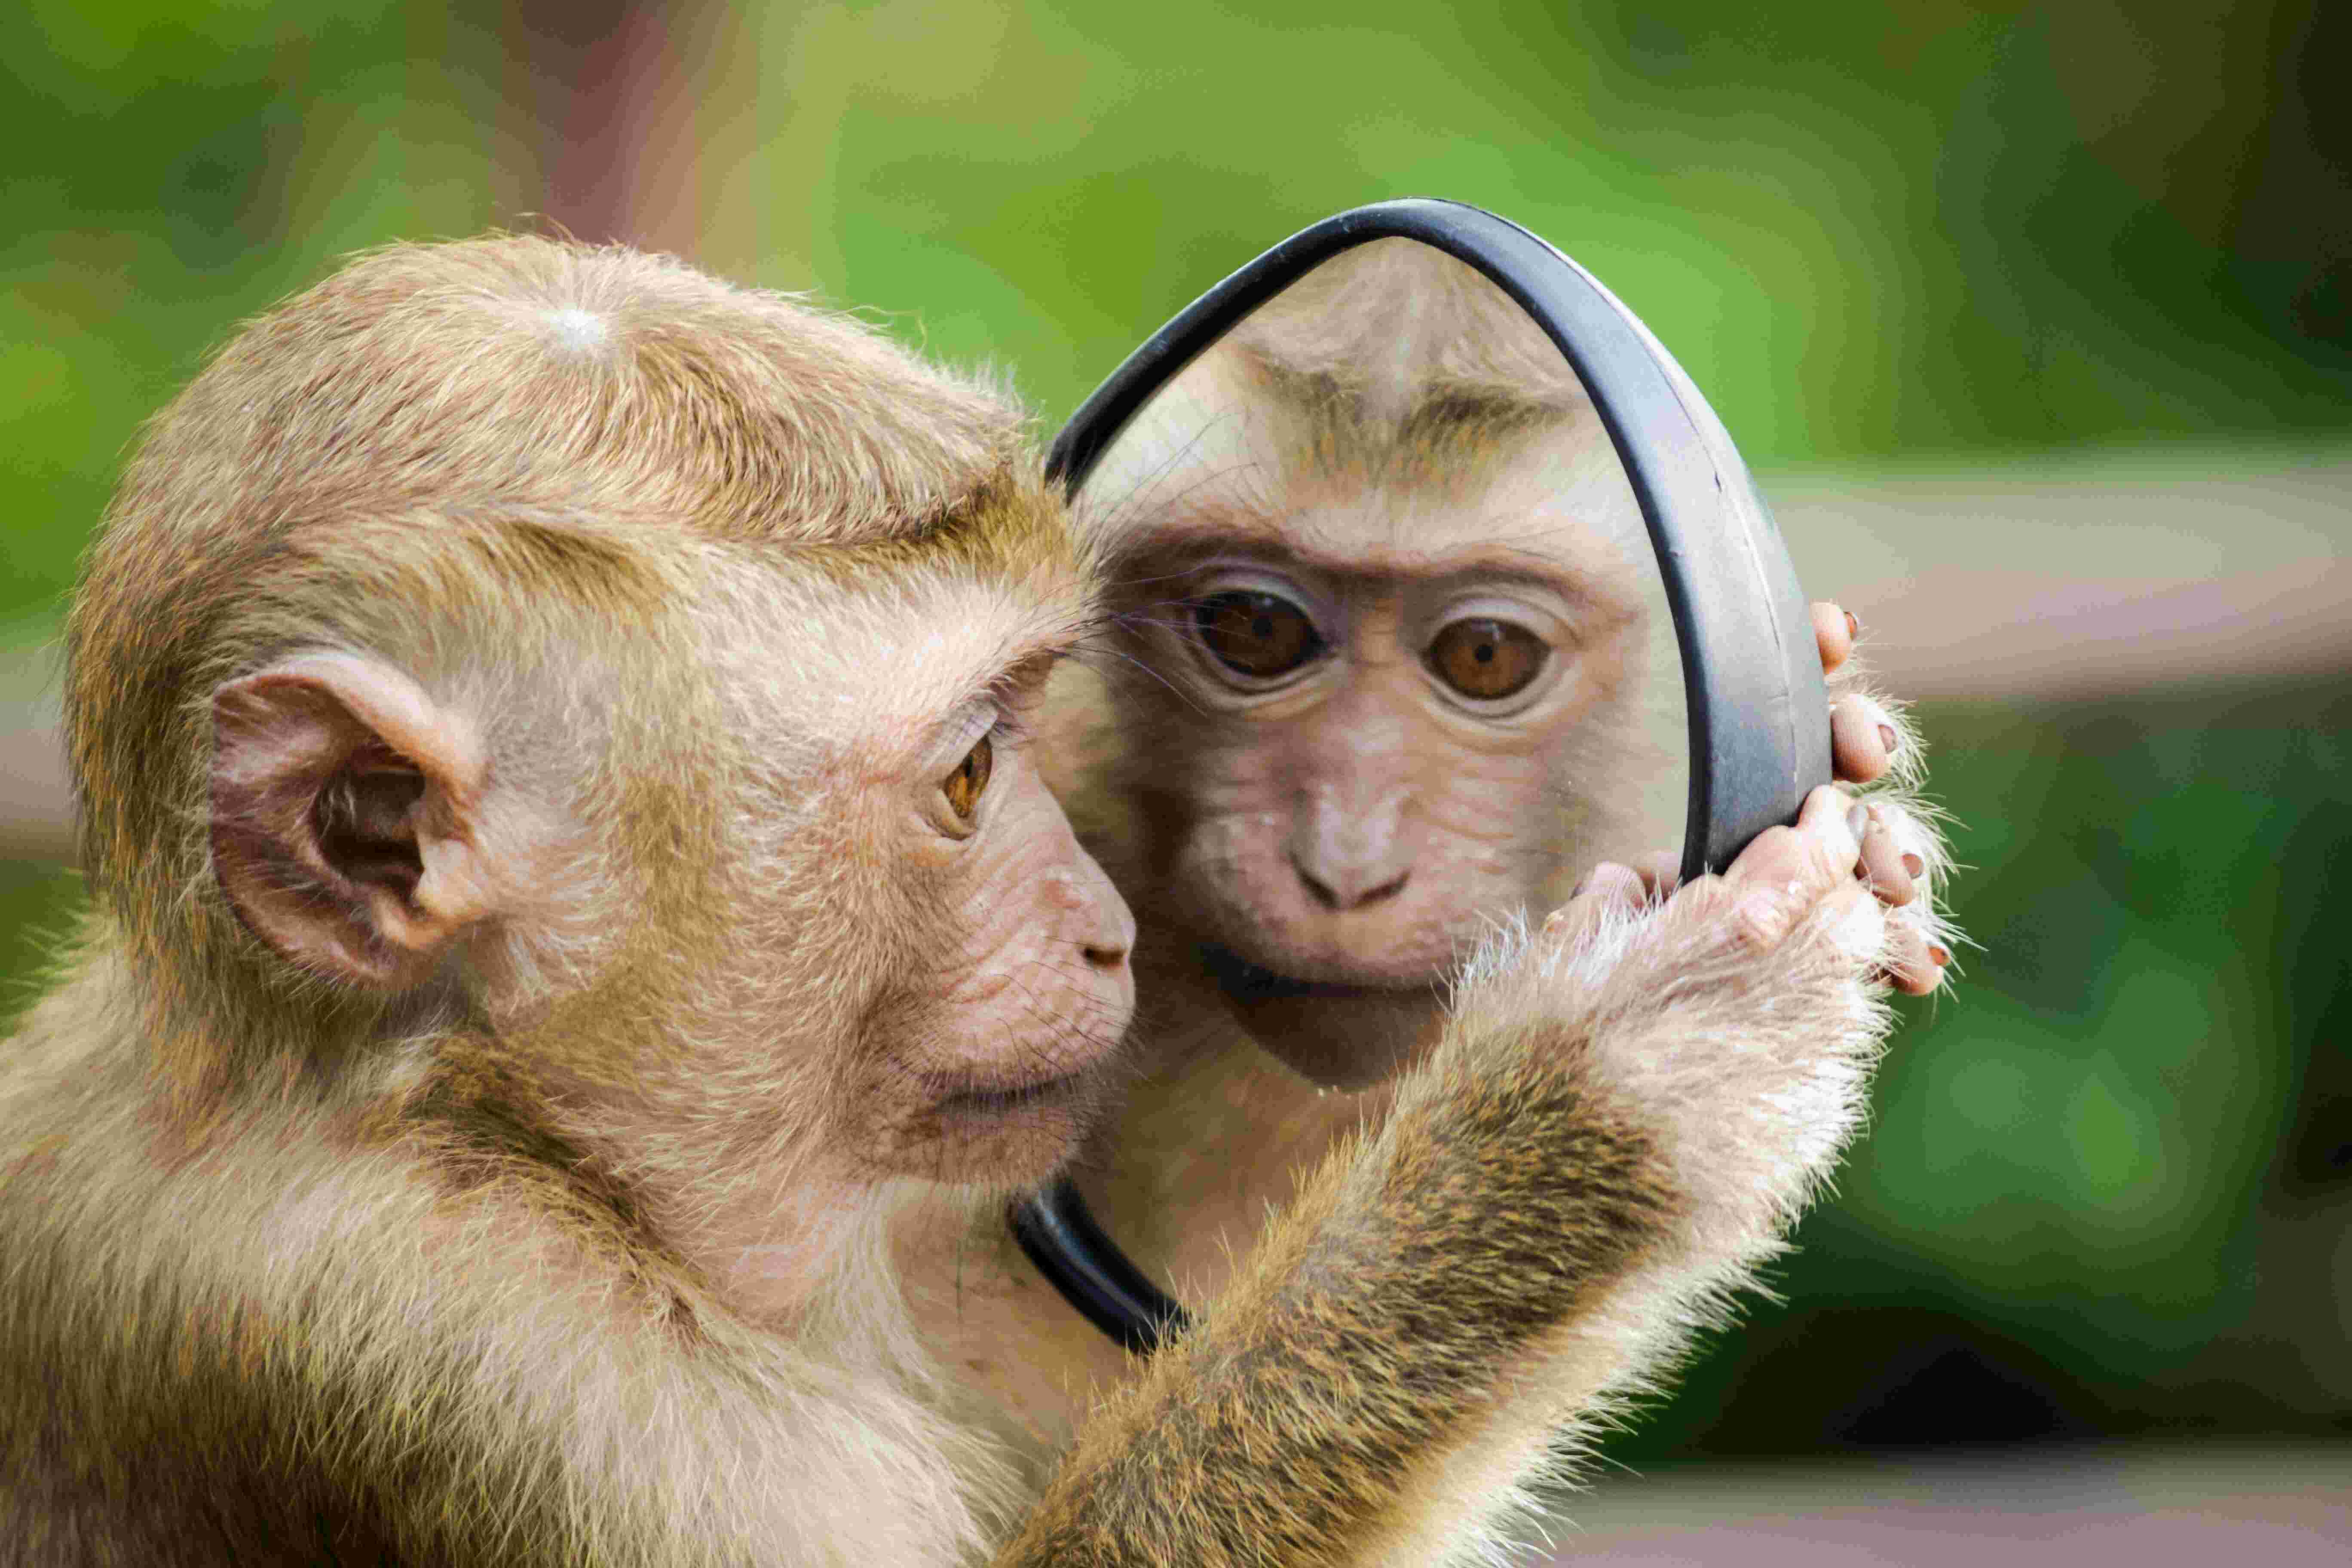 Sri Lanka scraps proposal to export monkeys to China